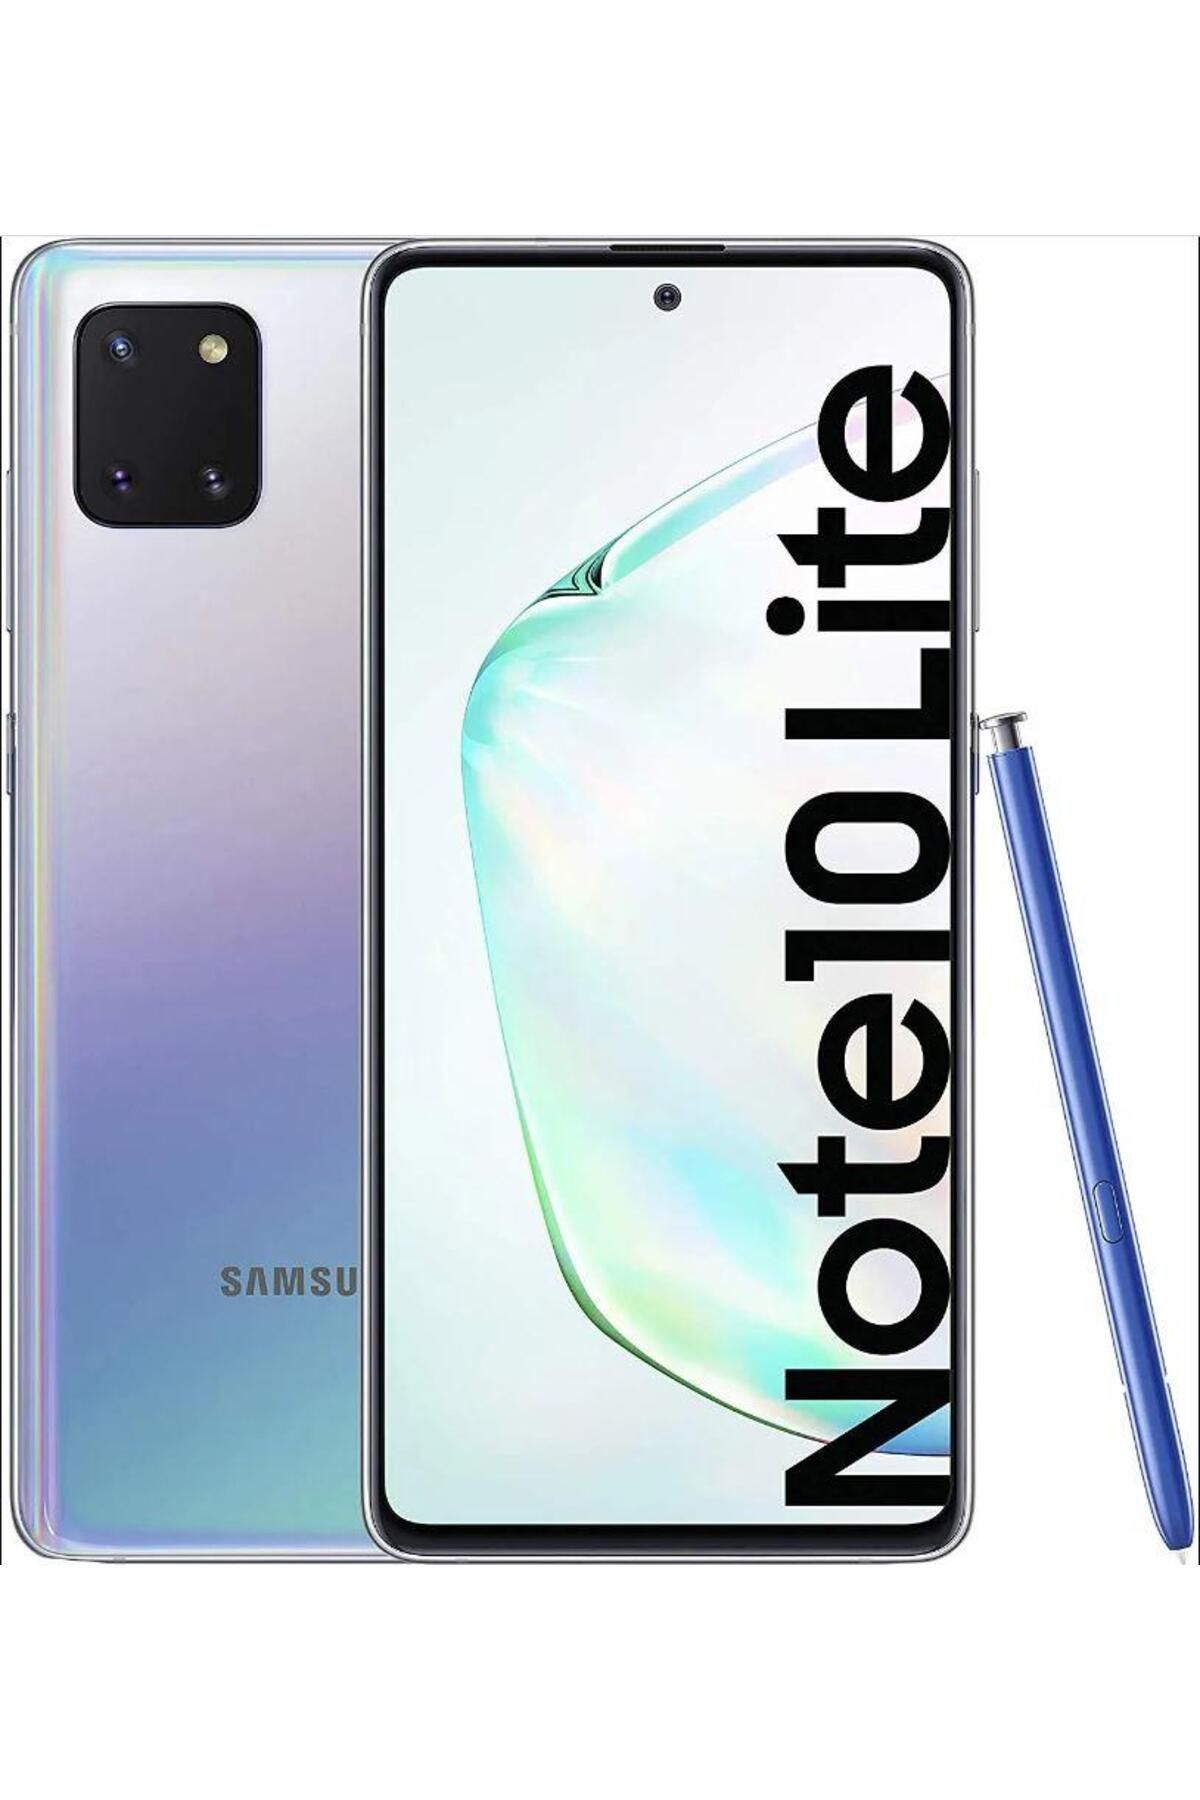 Samsung Galaxy Note 10 Lite 128 Gb White 8 Gb Ram Yenilenmiş Ürün (SIFIR GİBİ) A Kalite